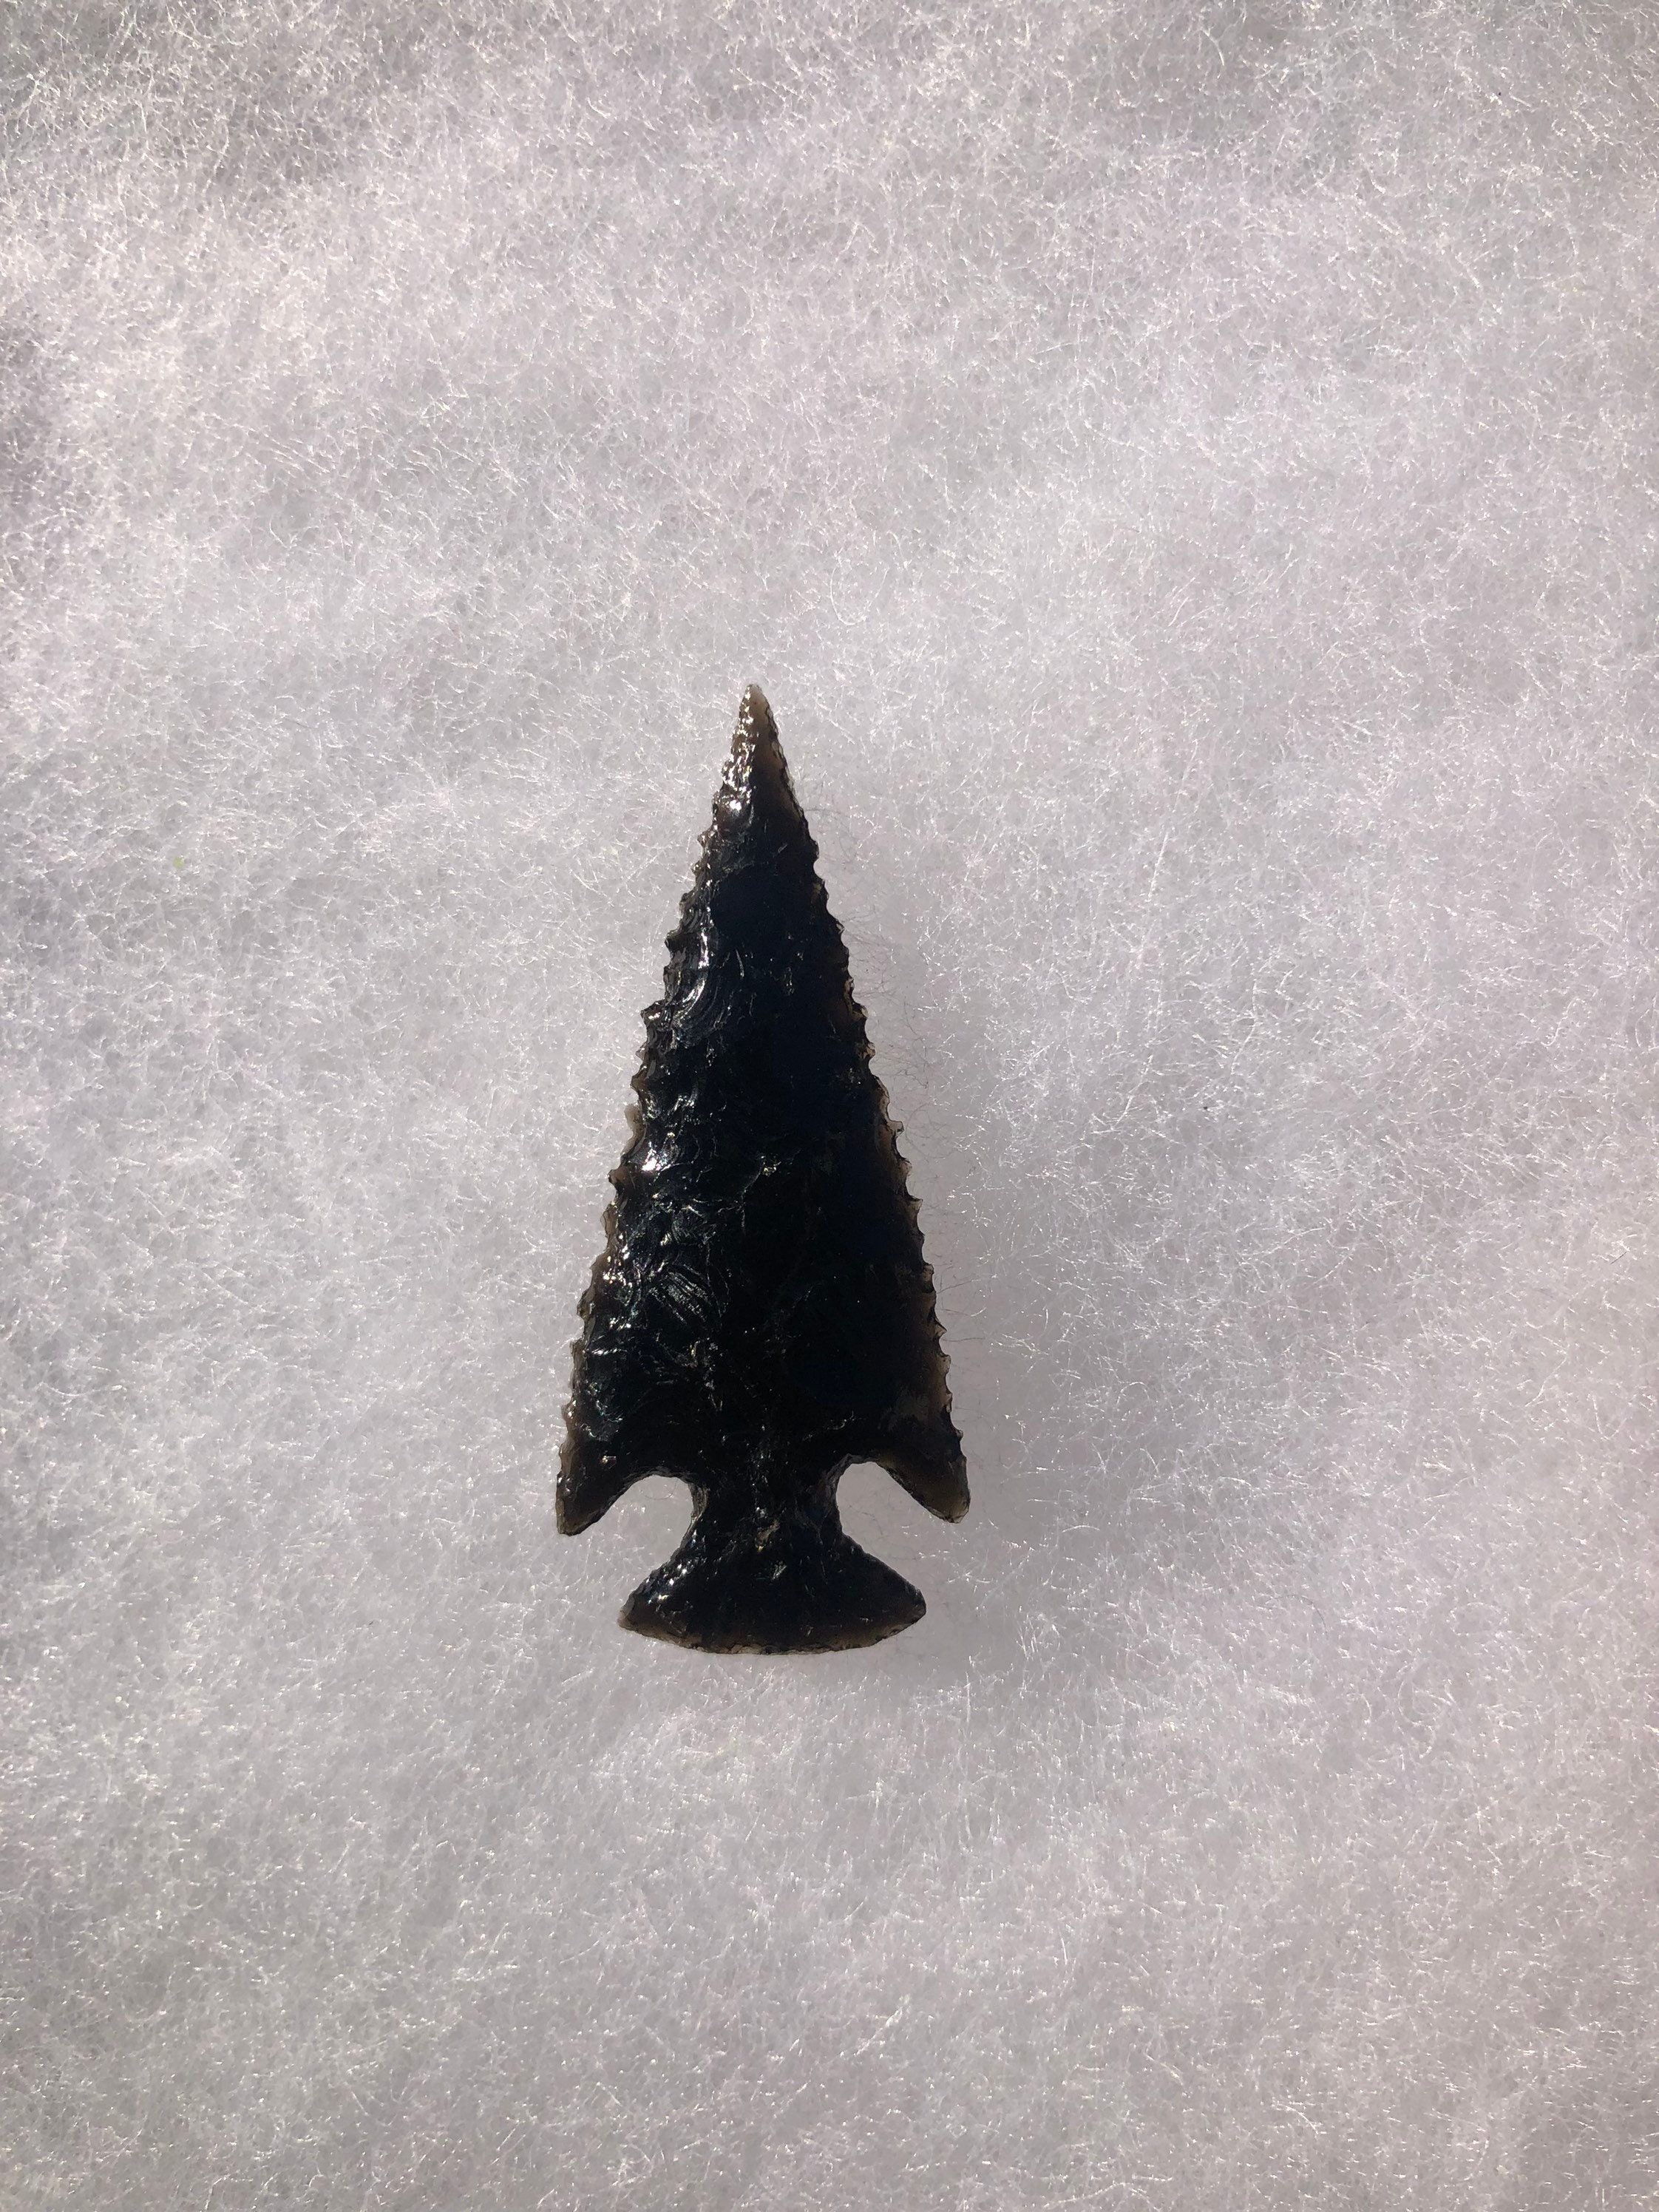 Translucent and striped obsidian corner notch arrowhead